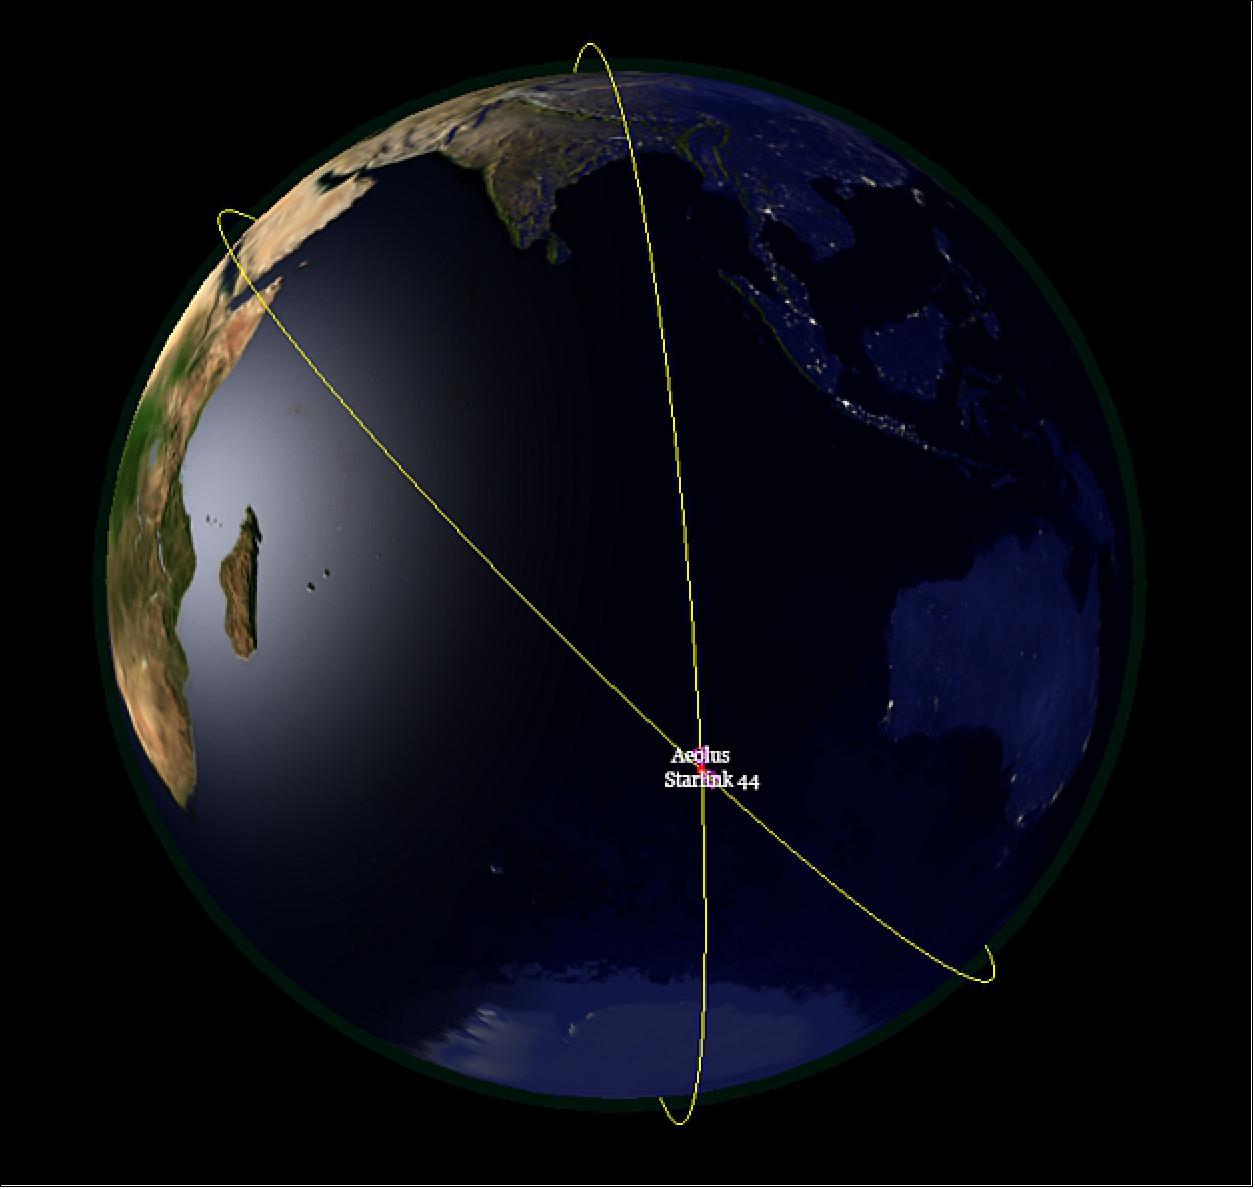 Figure 35: Predicted conjunction between Aeolus and Starlink 44 (image credit: ESA)